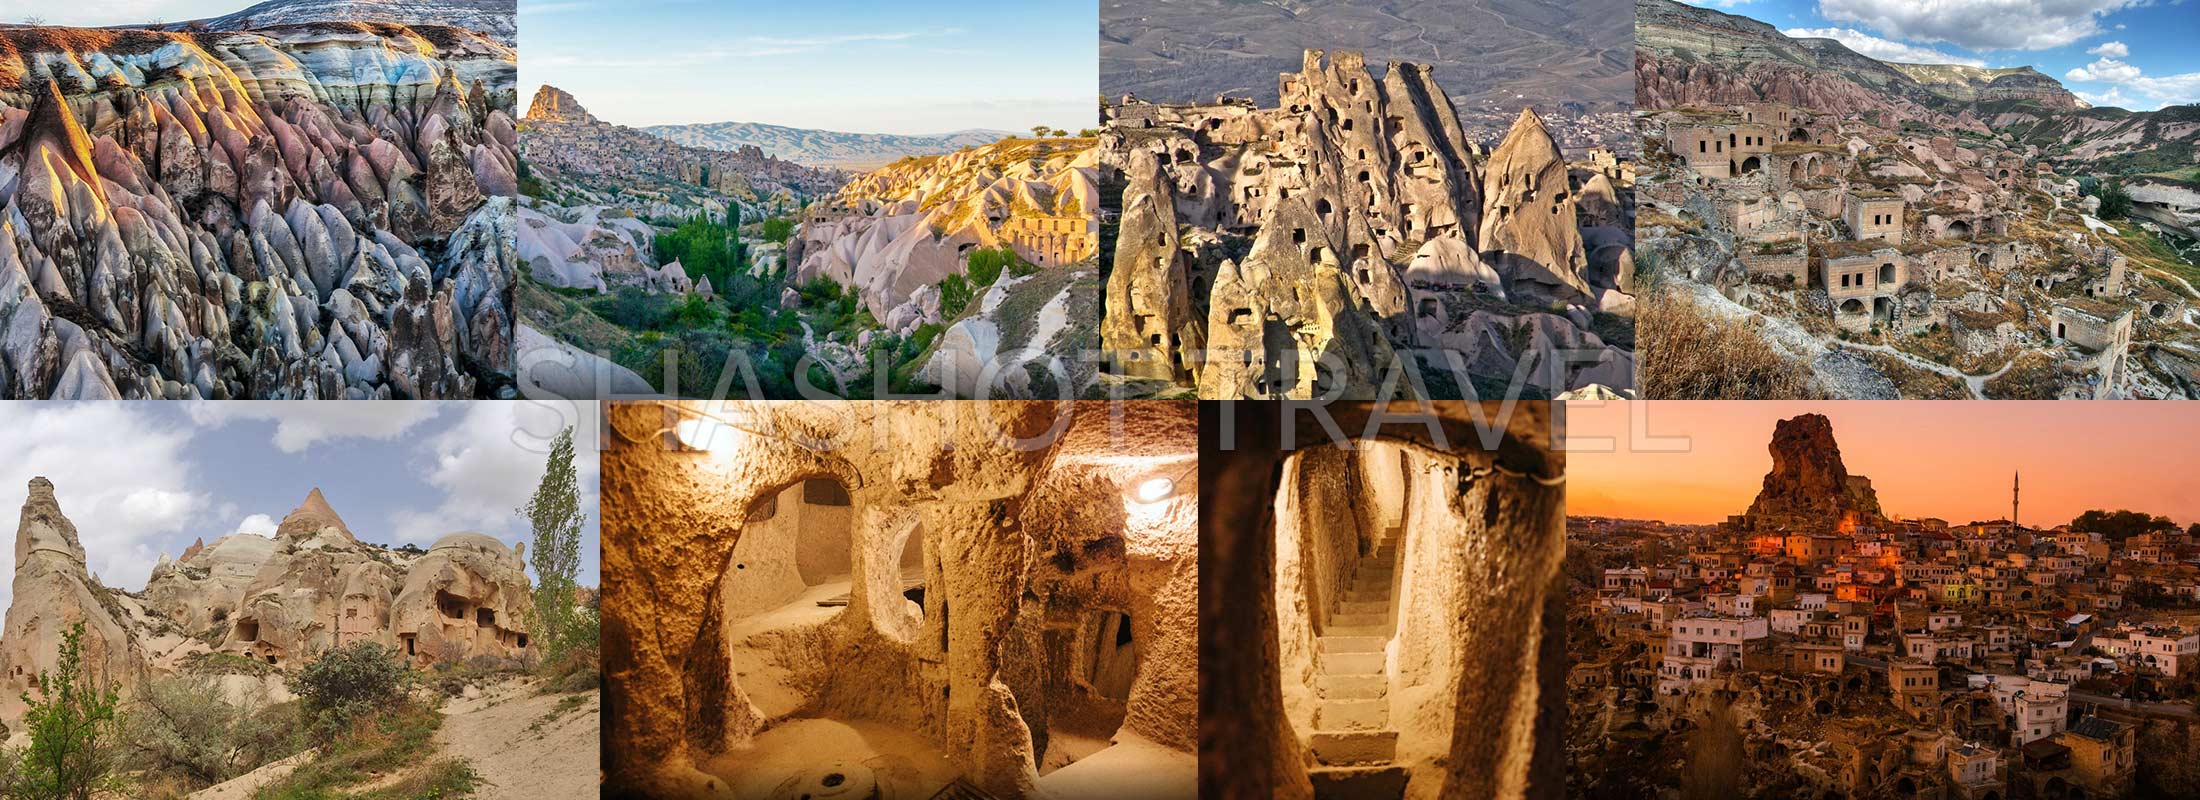 cappadocia-turquia-shashot-travel-Tour-a-pie